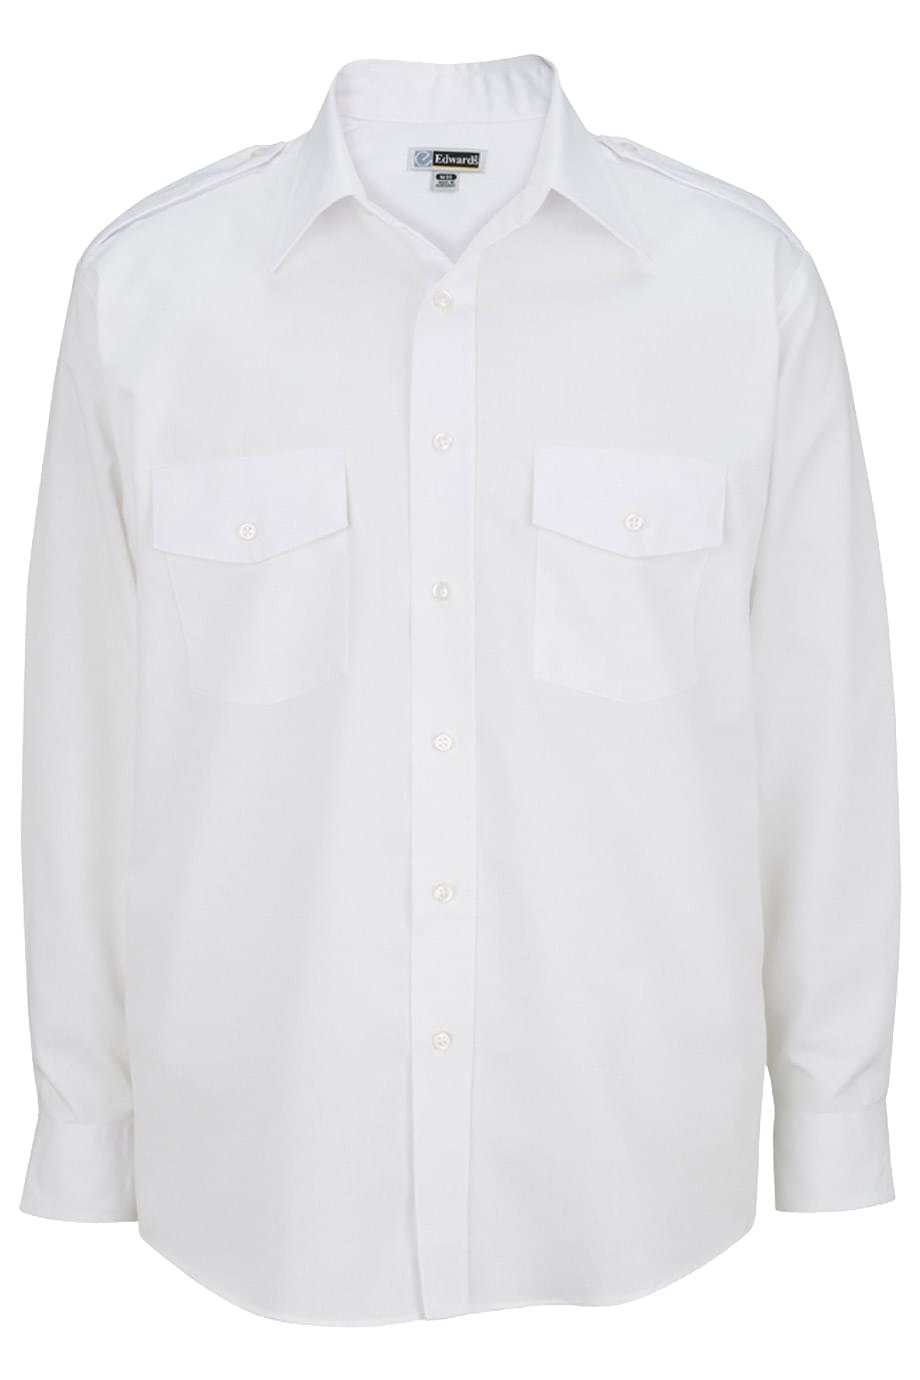 Edwards Garment 1262 - Men's Long Sleeve Navigator Shirt